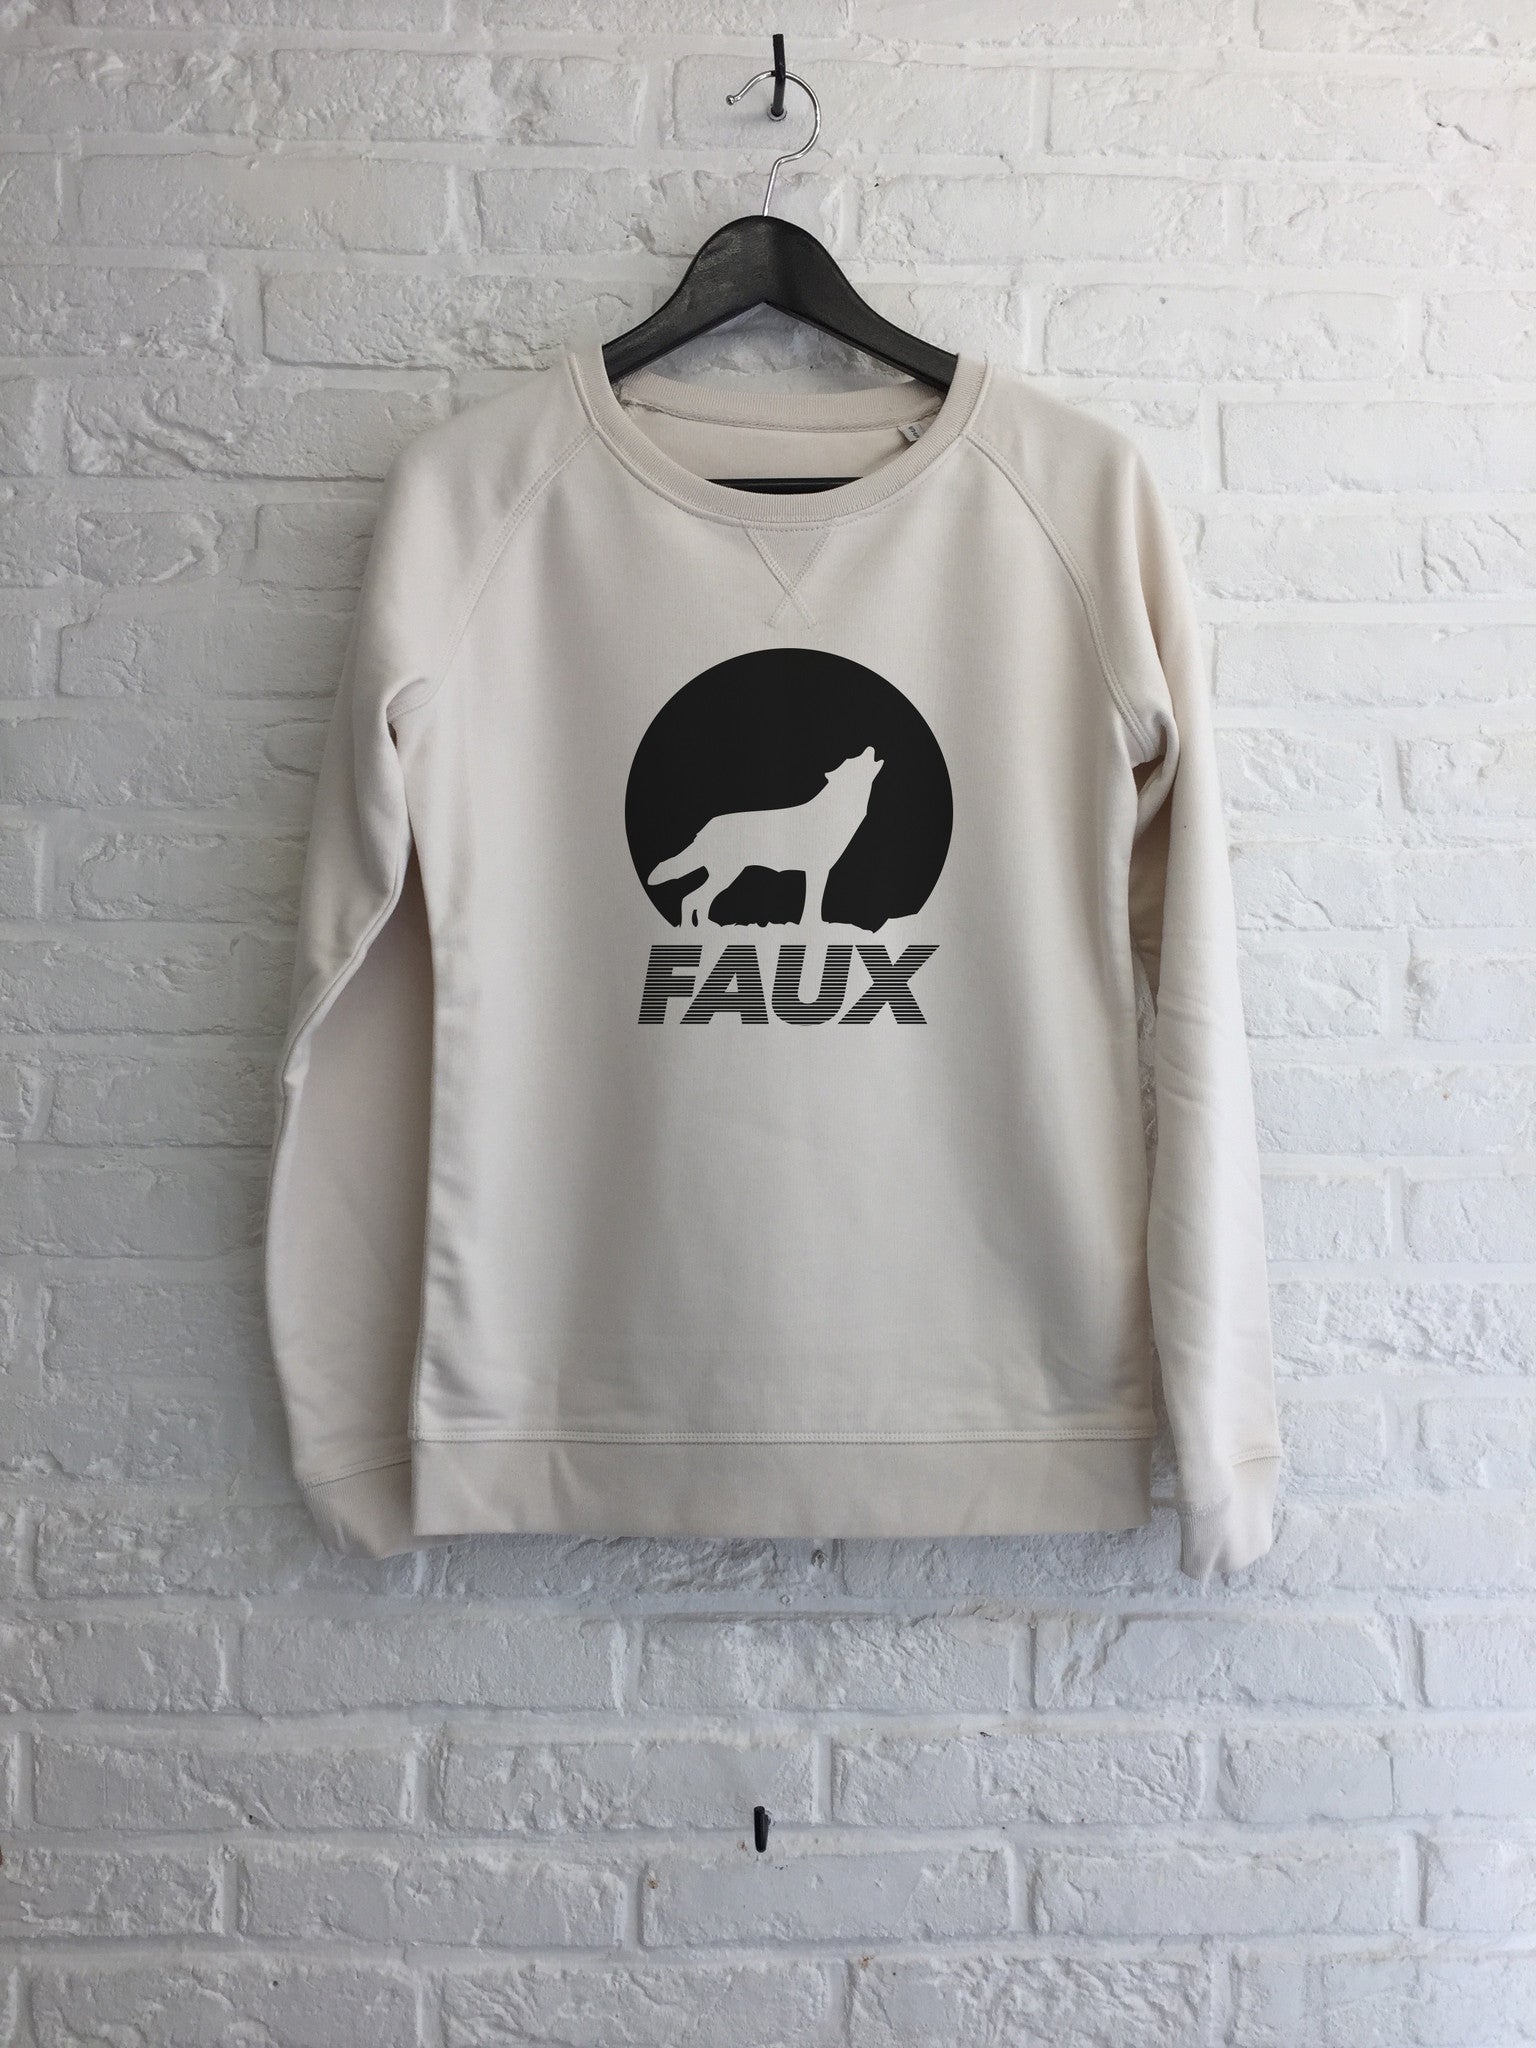 Faux loup - Sweat - Femme-Sweat shirts-Atelier Amelot